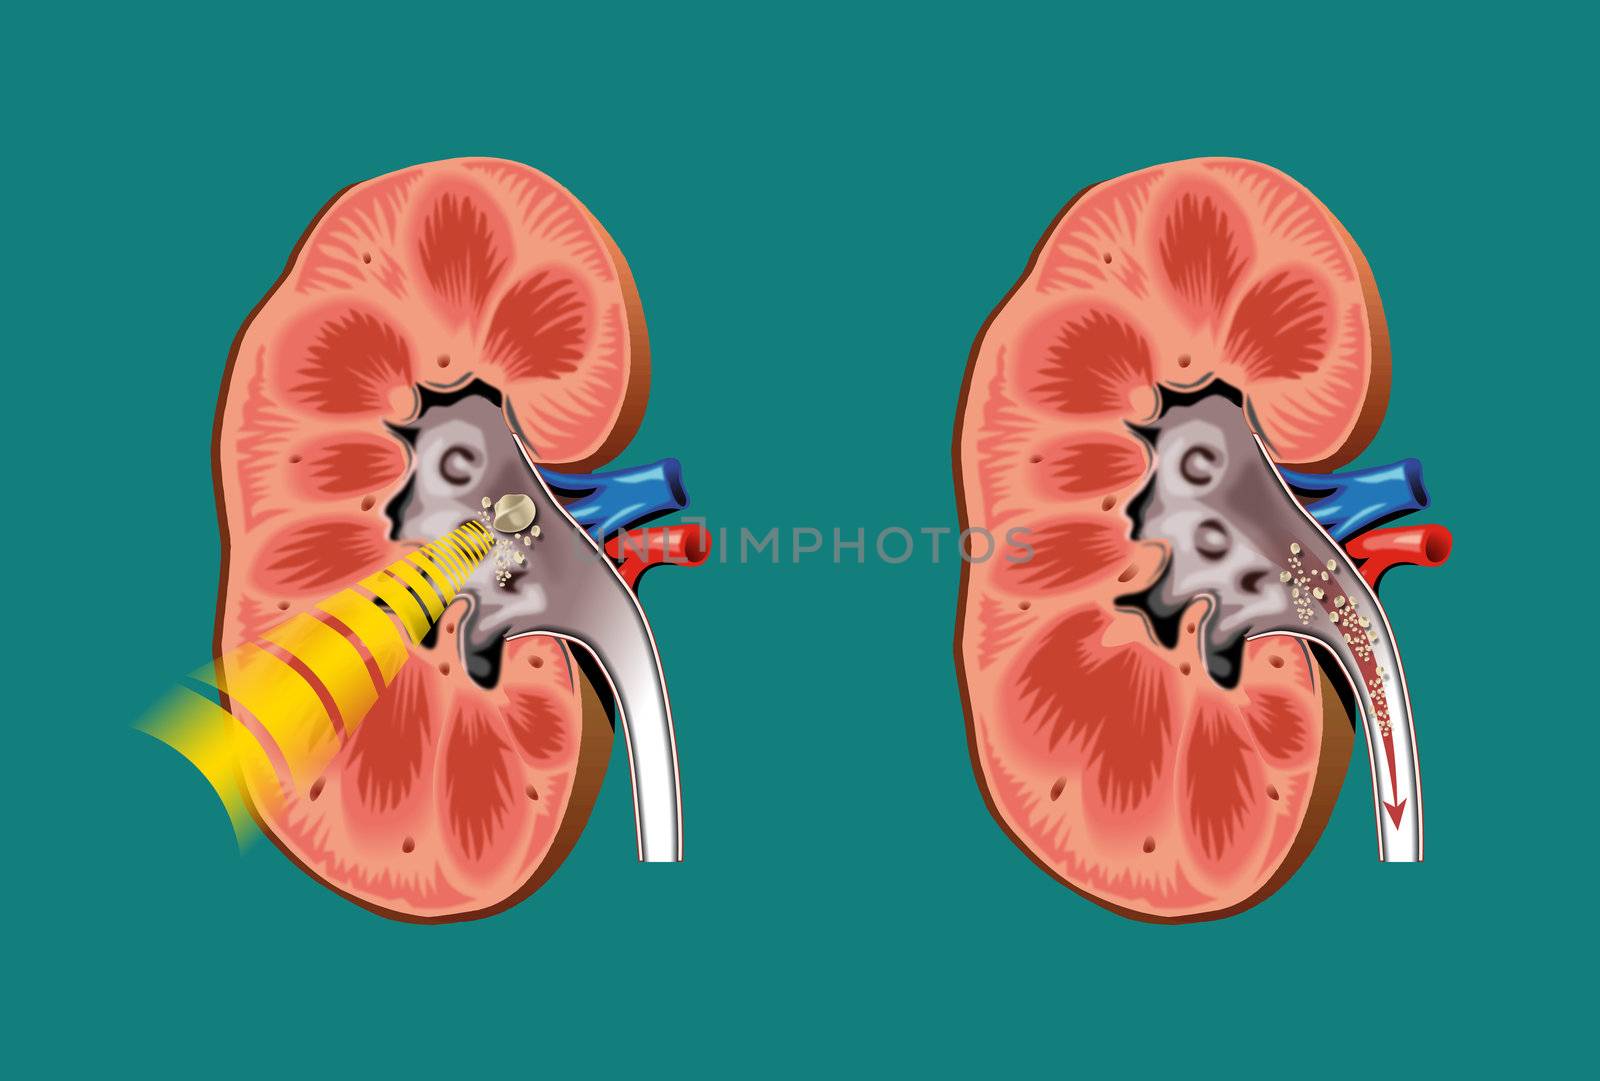 lithotripsy in kidney stones by alexonline